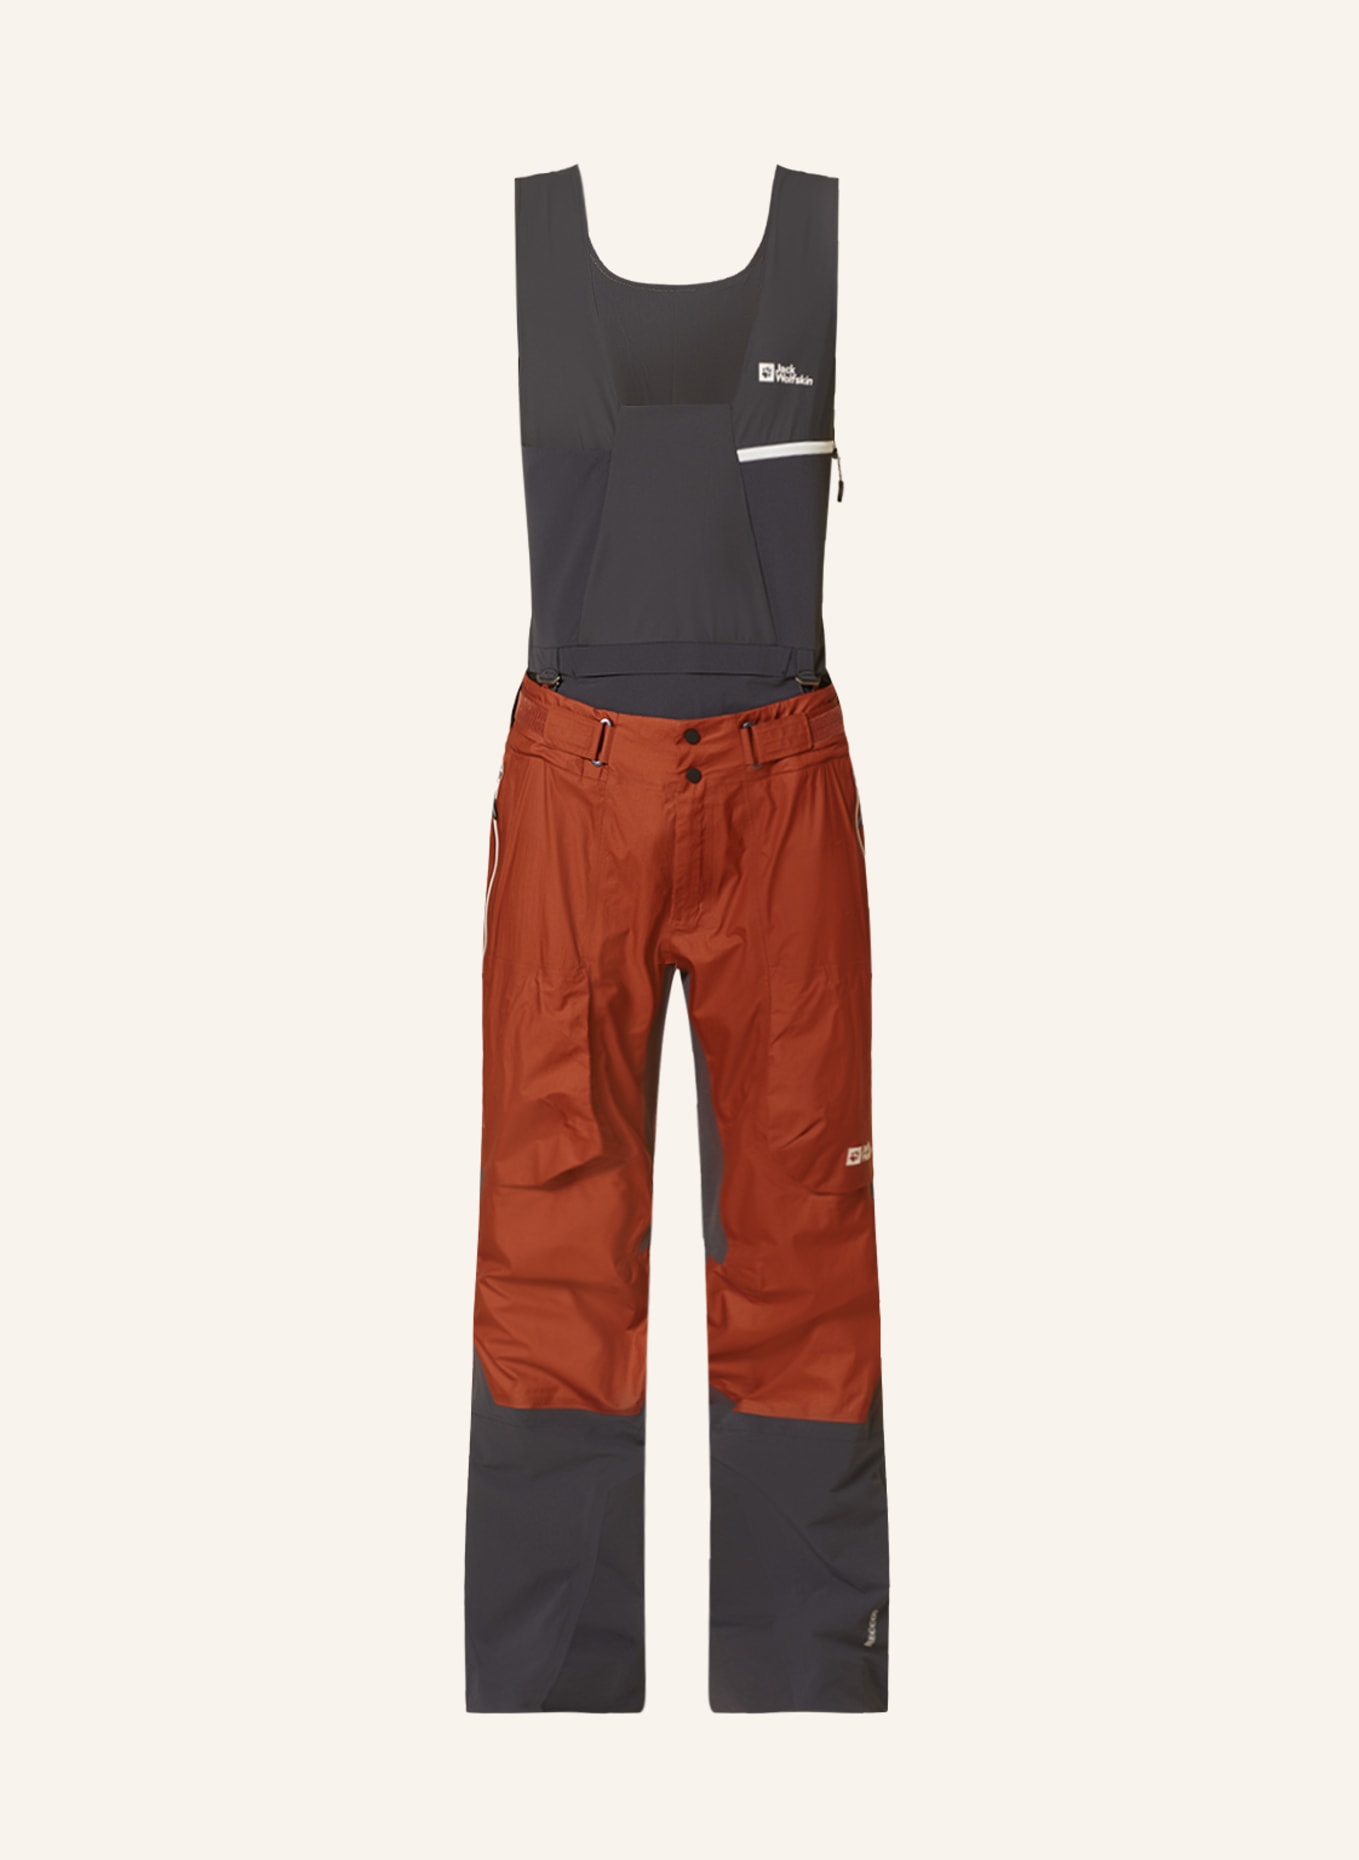 THE NORTH FACE - Men's Convertible Trousers - Men's Convertible Trousers to  Shorts - Waterproof Work or Hiking Trousers - TNF Black, UK 30 :  Amazon.co.uk: Fashion